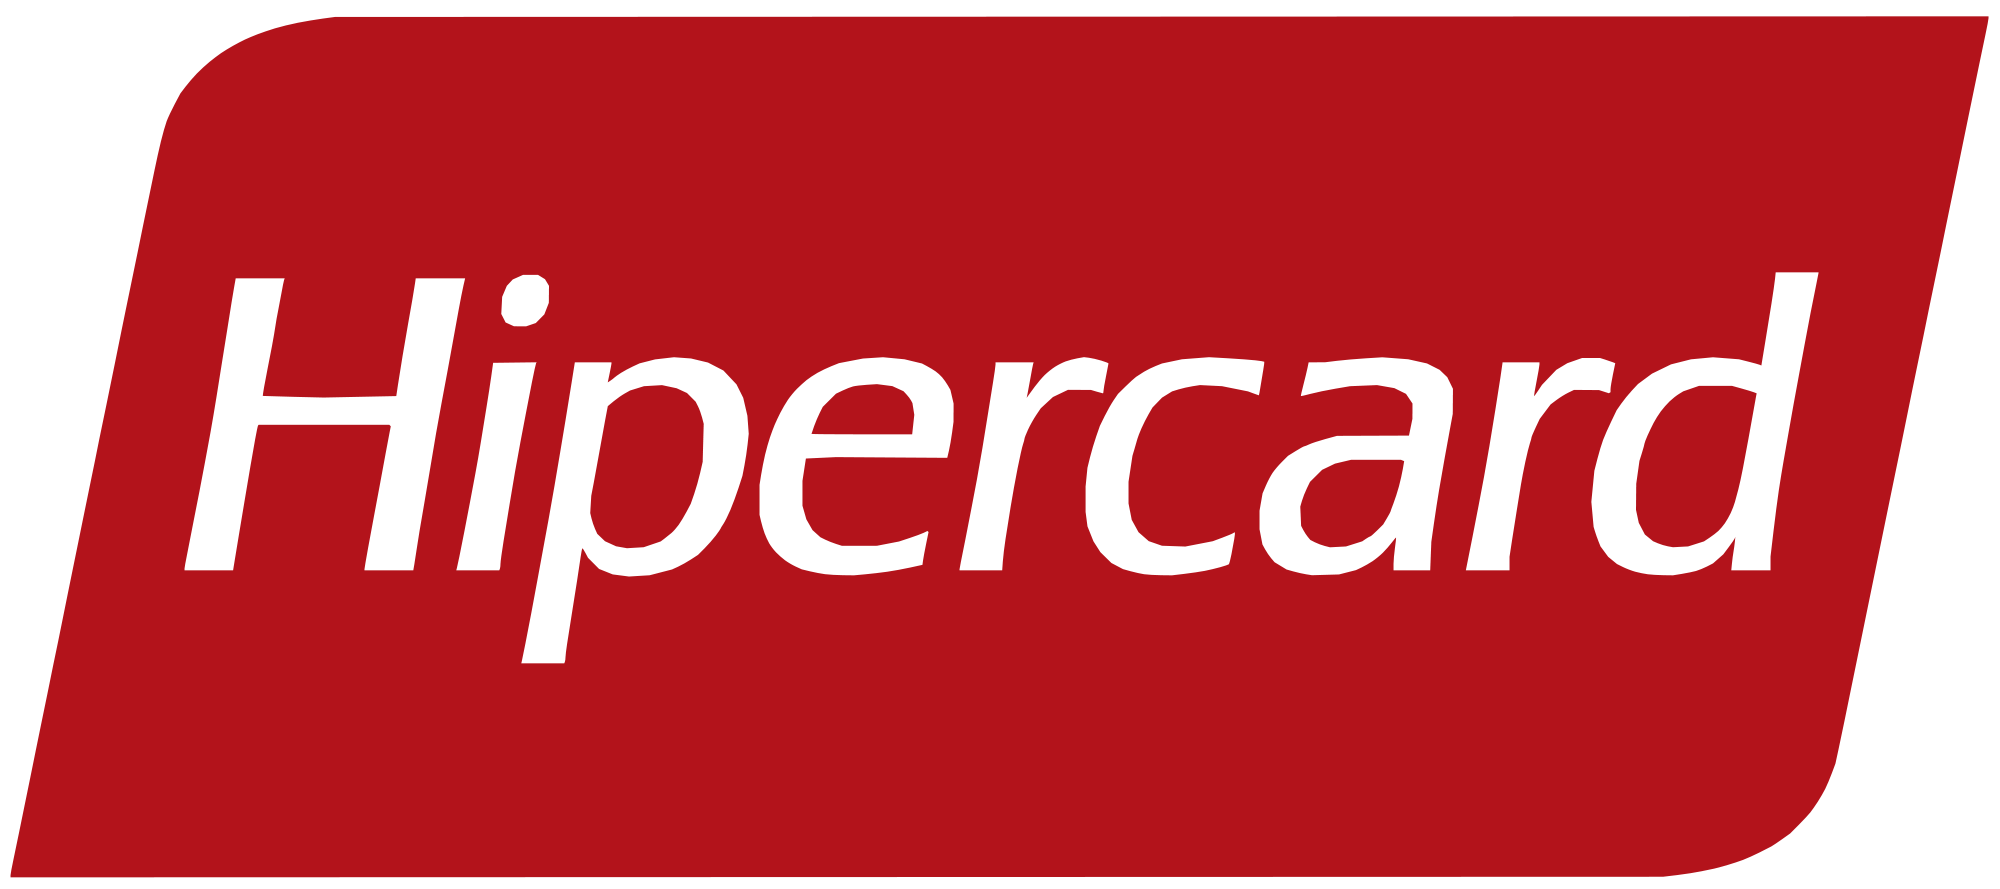 2000px Hipercard logo.svg